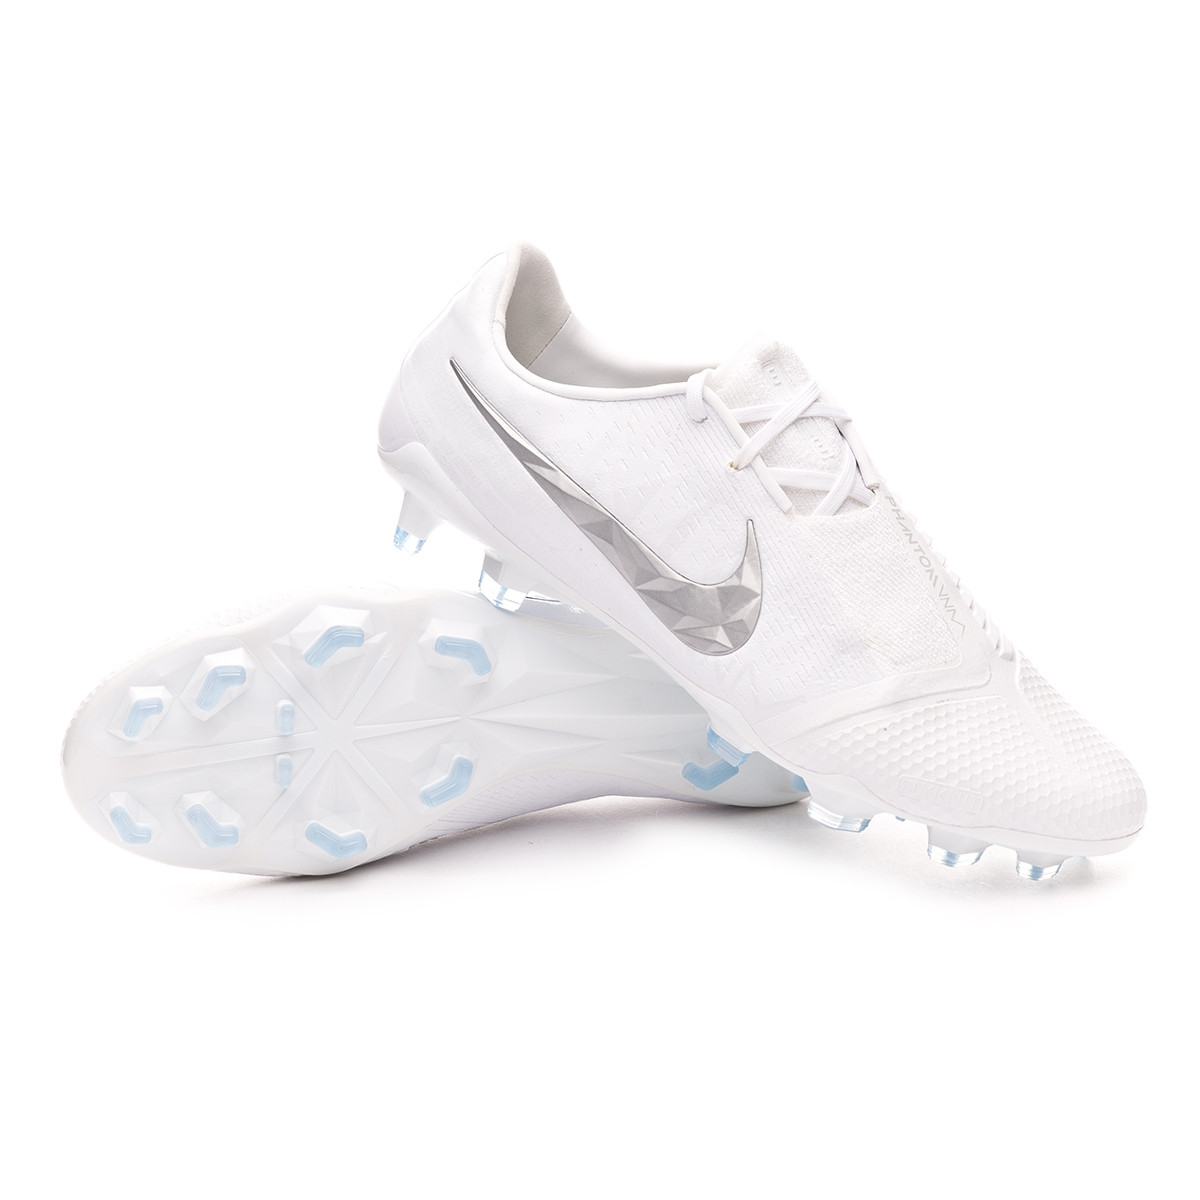 Football Boots Nike Phantom Venom Elite FG White-Metallic platinum -  Football store Fútbol Emotion